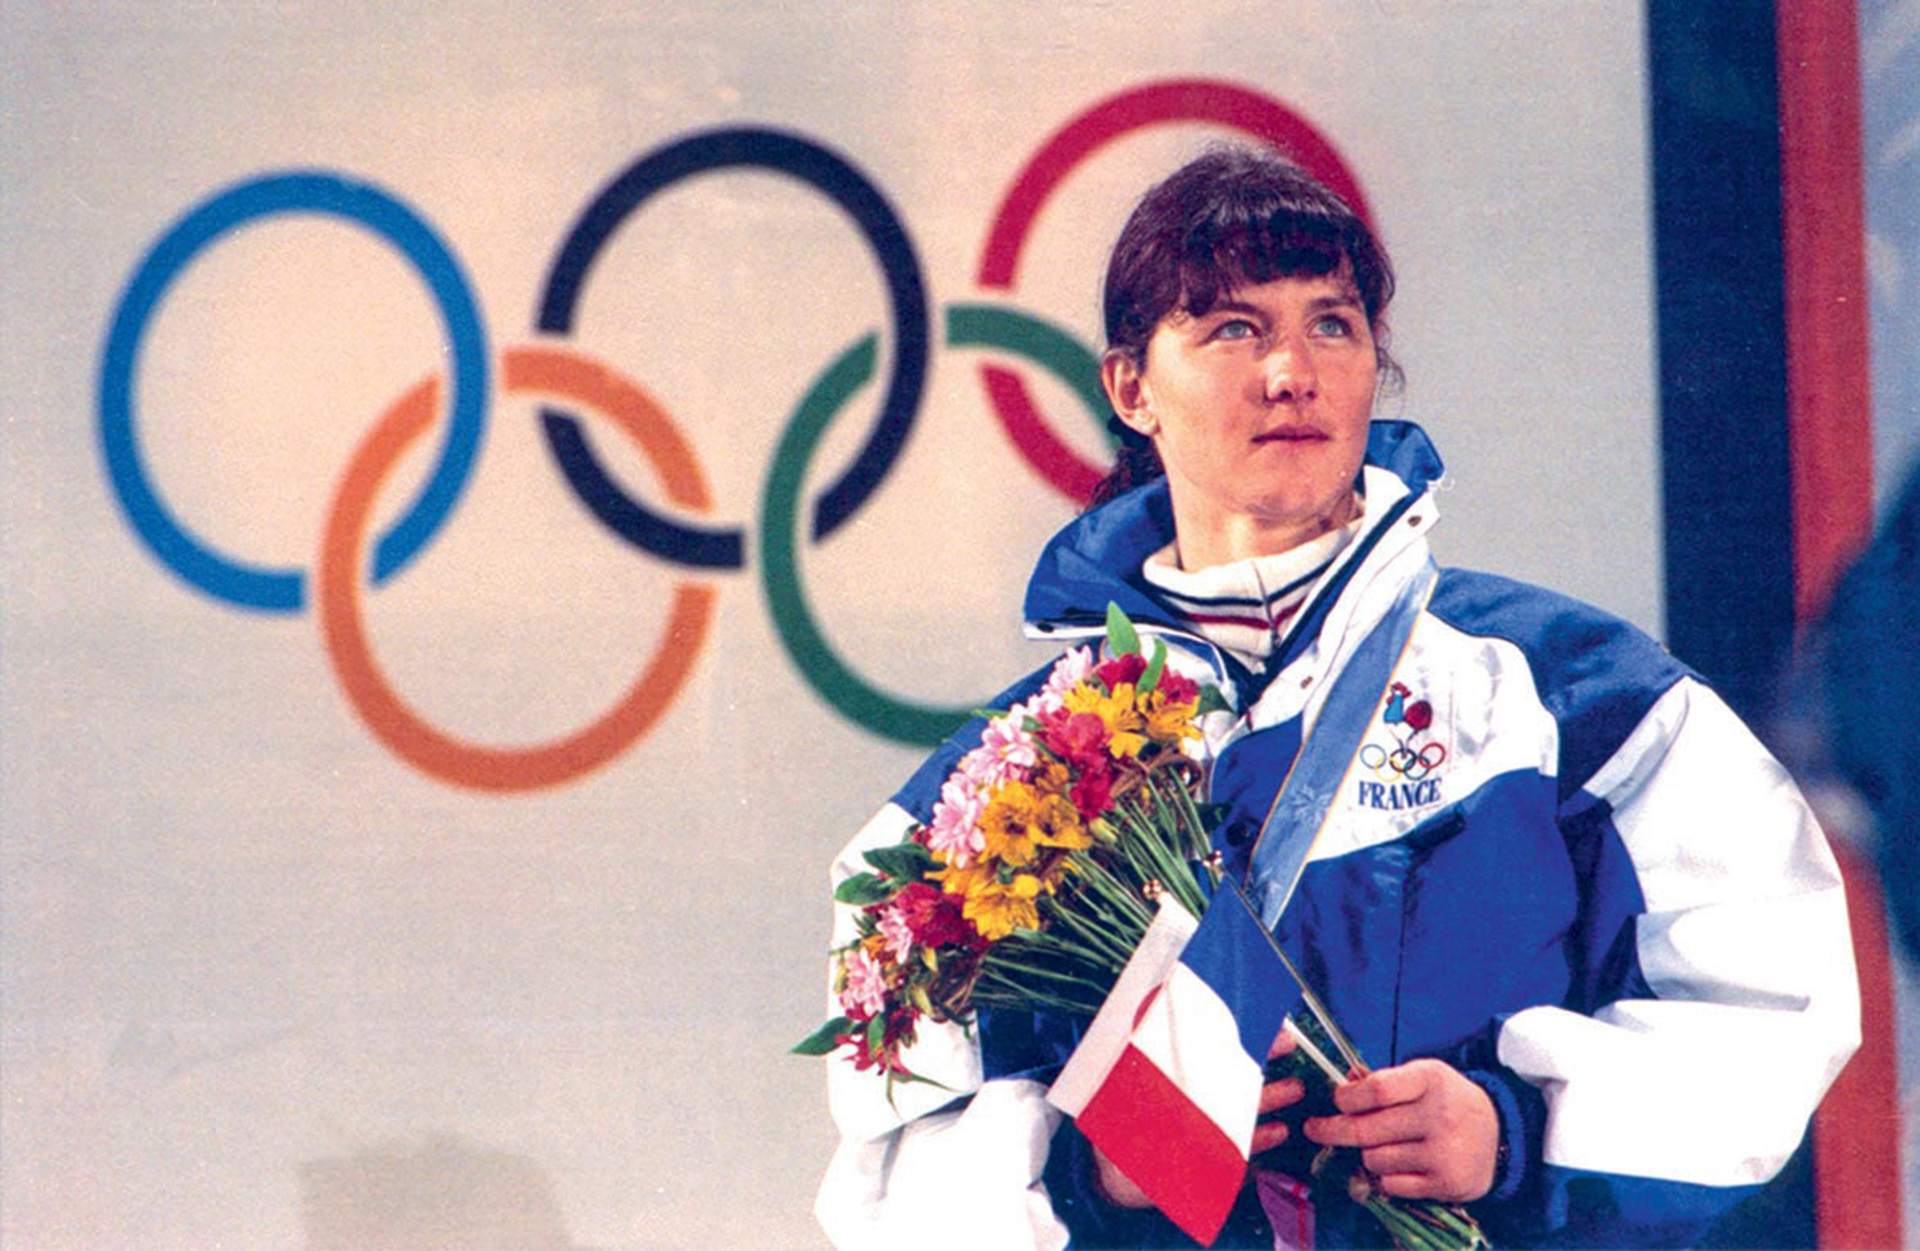 Chamrousse champion florence masnada jo jeux olympiques hiver 1992 1998 ski alpin médaille bronze station ski isère france - © Chappaz Sylvie - CIO